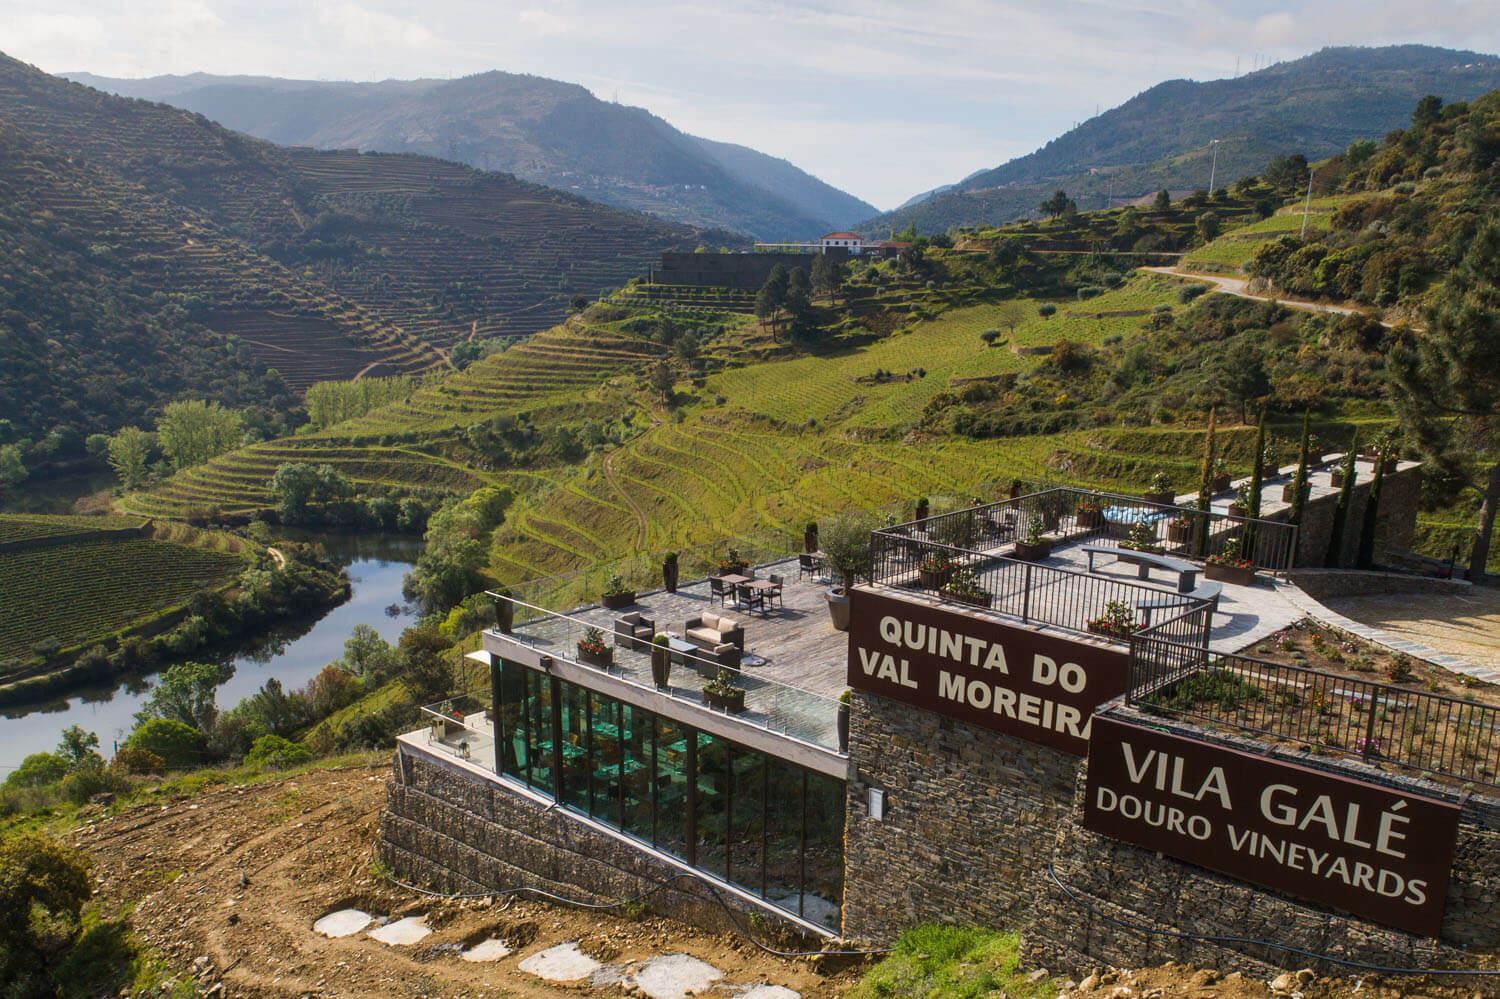 Hotel Vila Galé Douro Vineyards - Vista Aerea